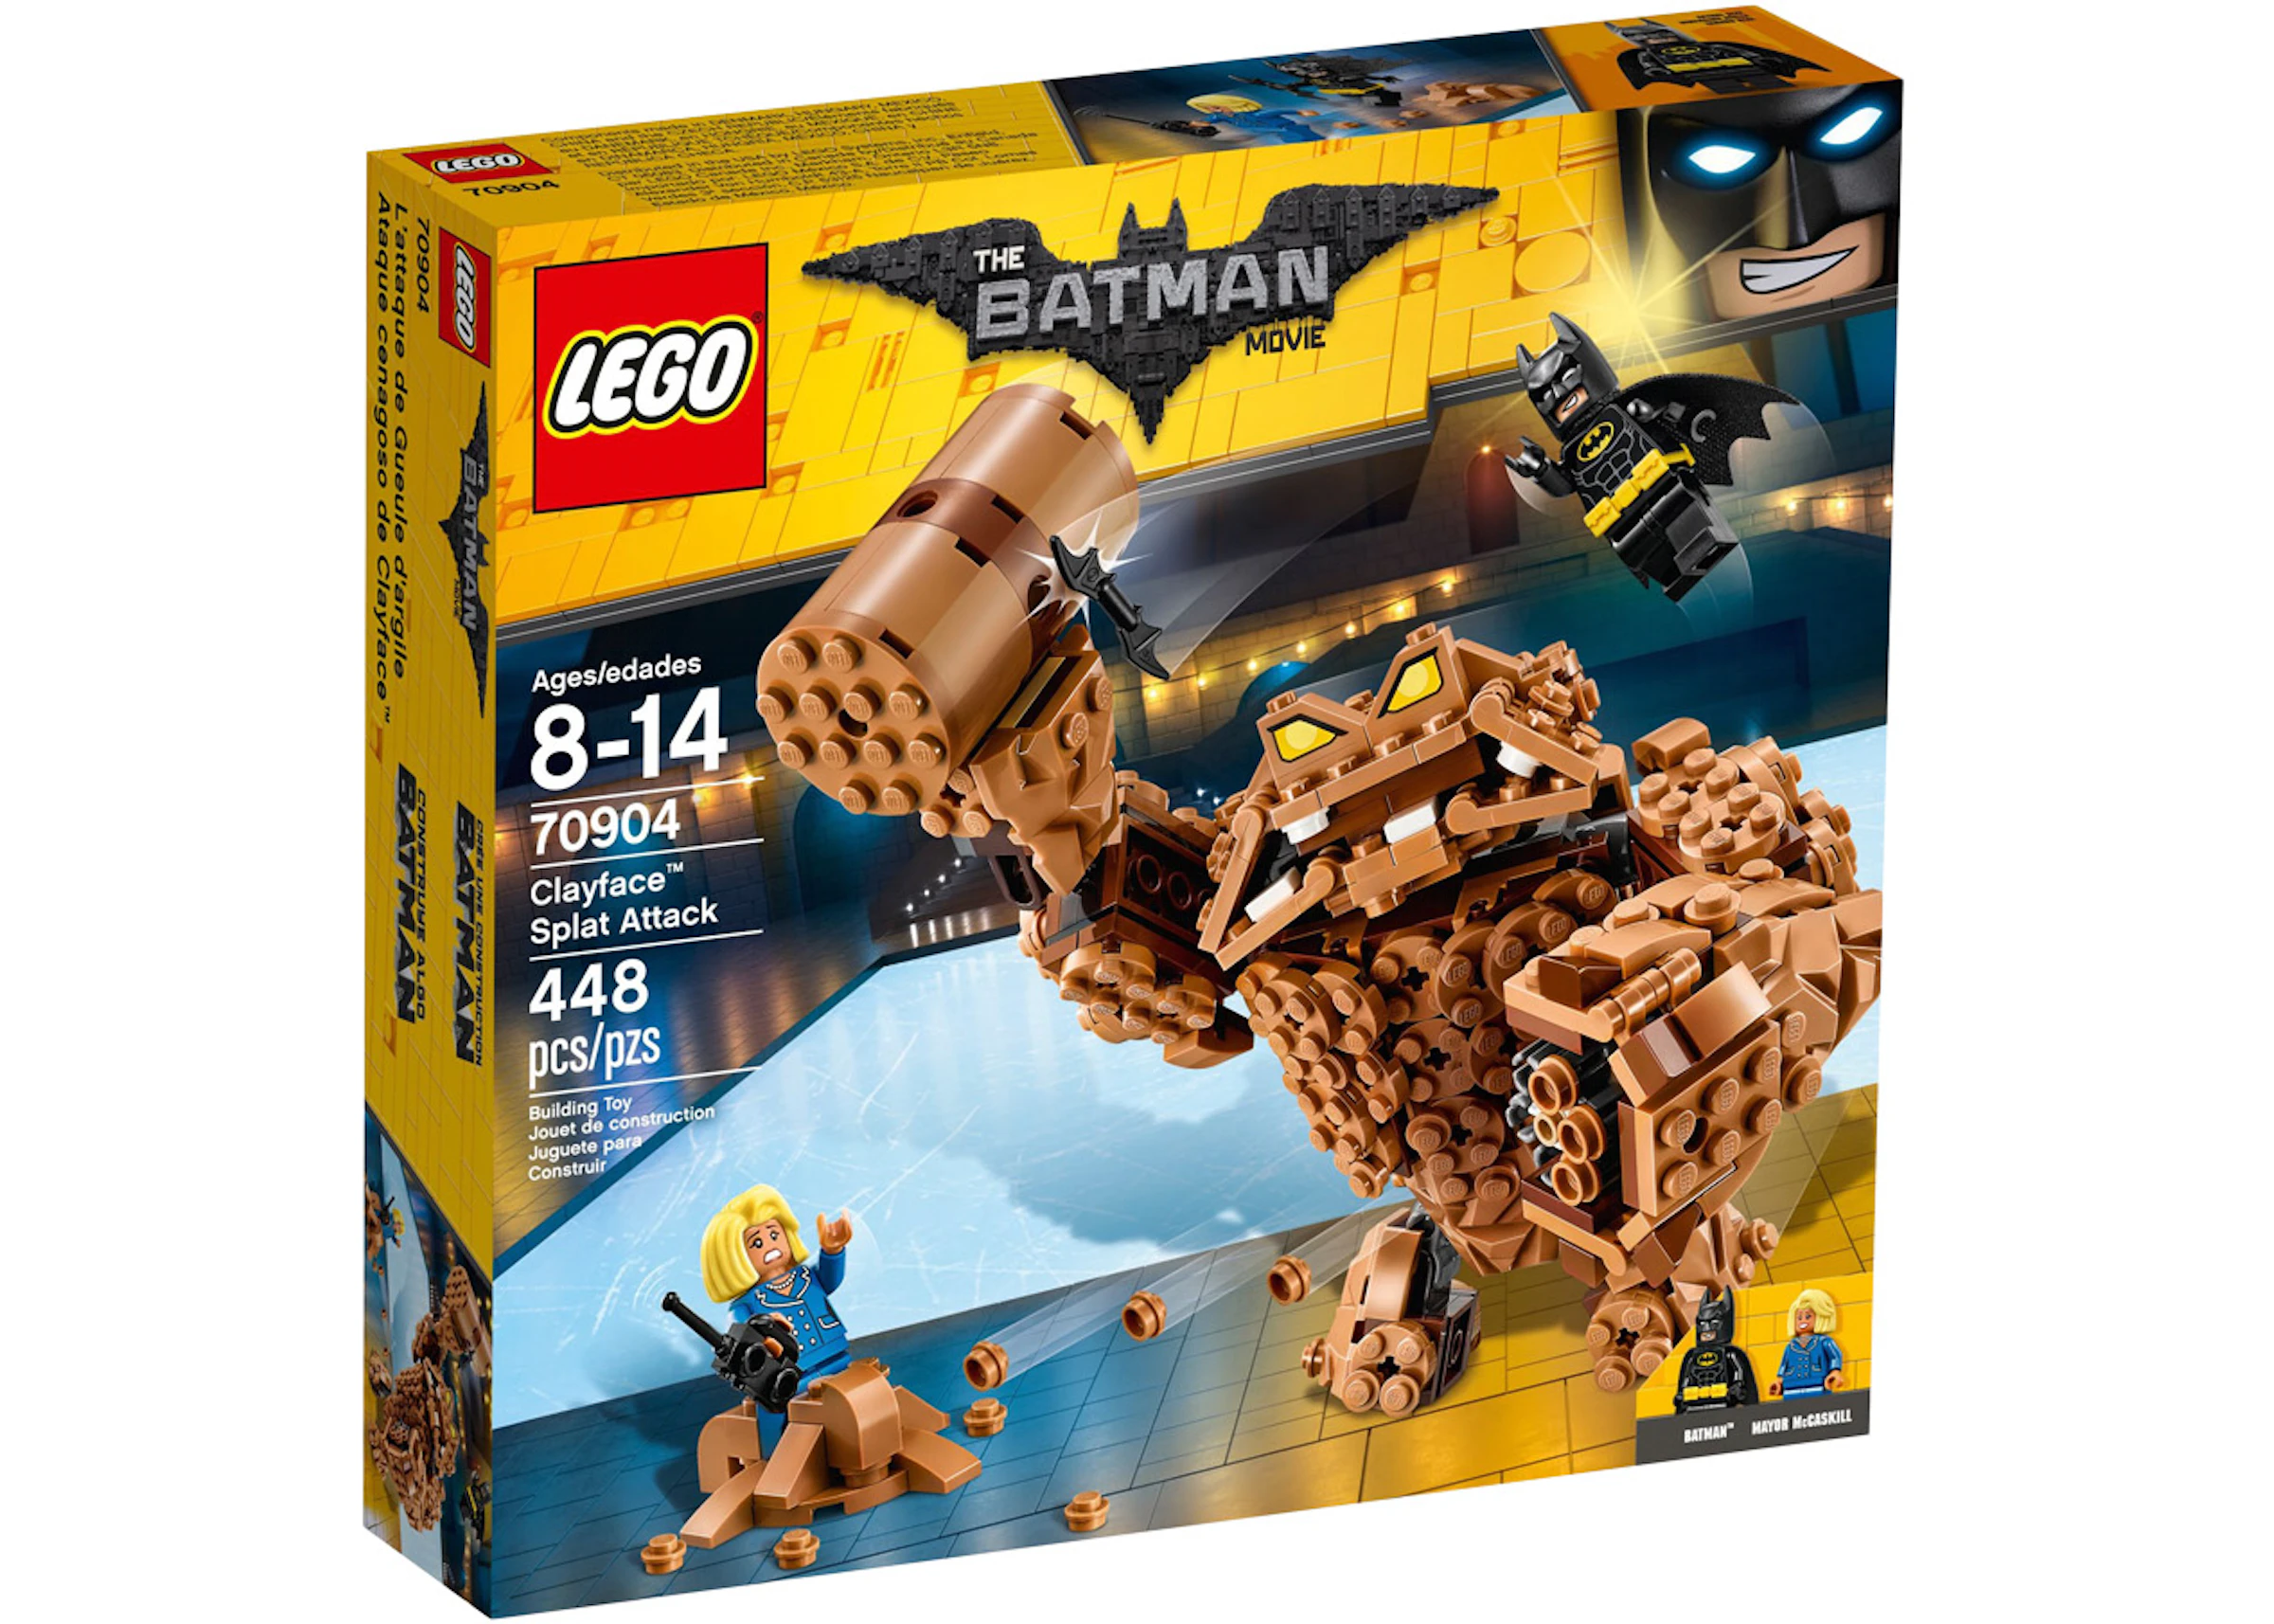 LEGO The LEGO Batman Movie Clayface Splat Attack Set 70904 - MX